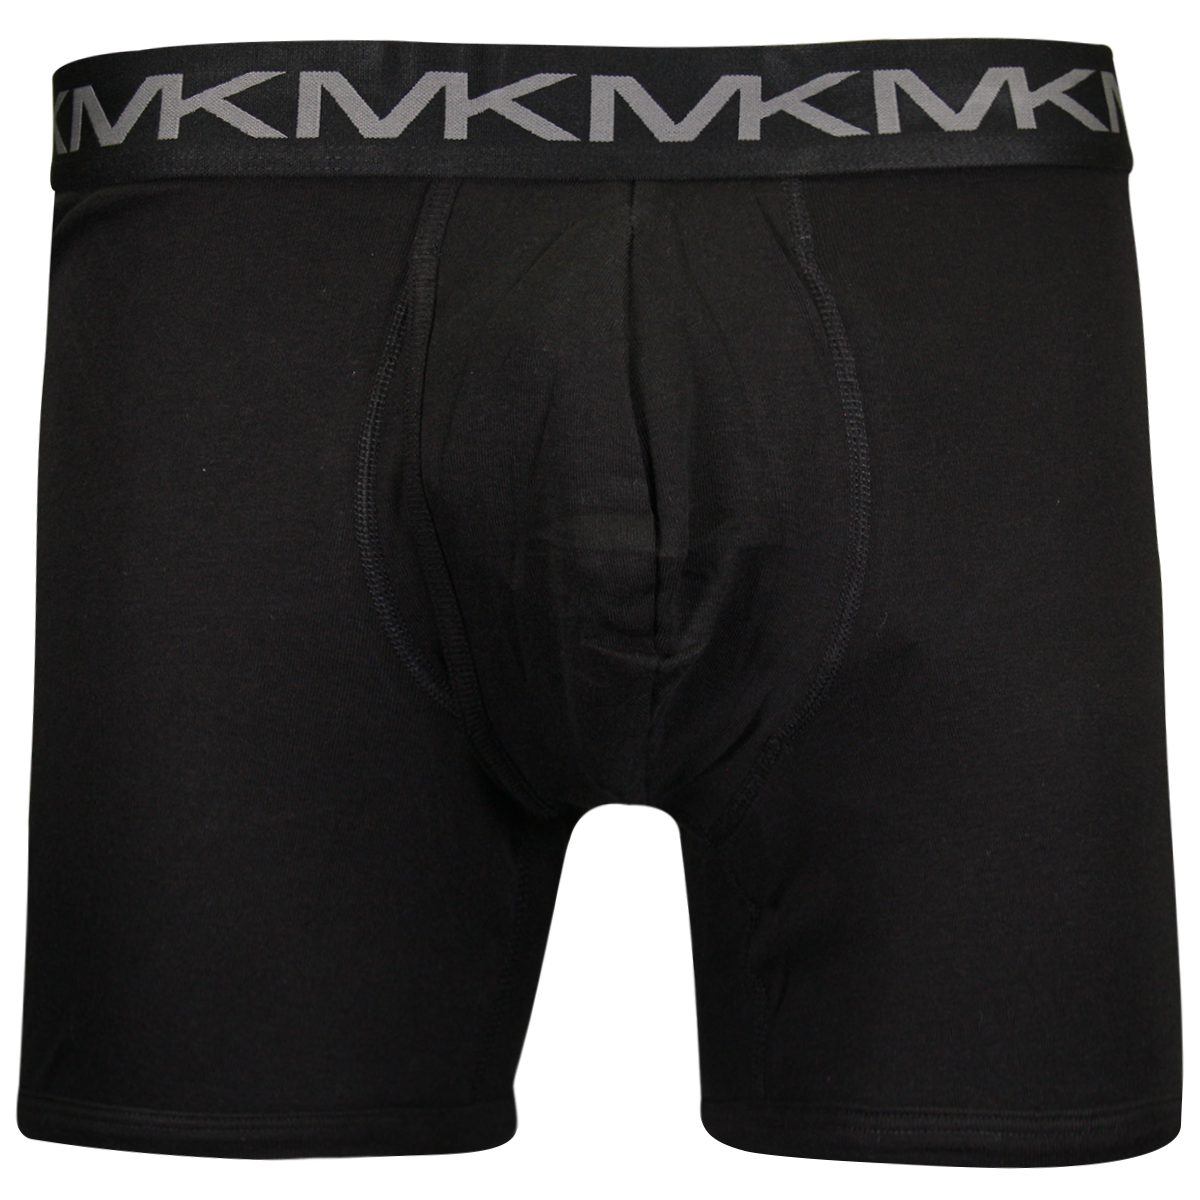 Michael Kors Men's Black 3 Pack Boxer Briefs